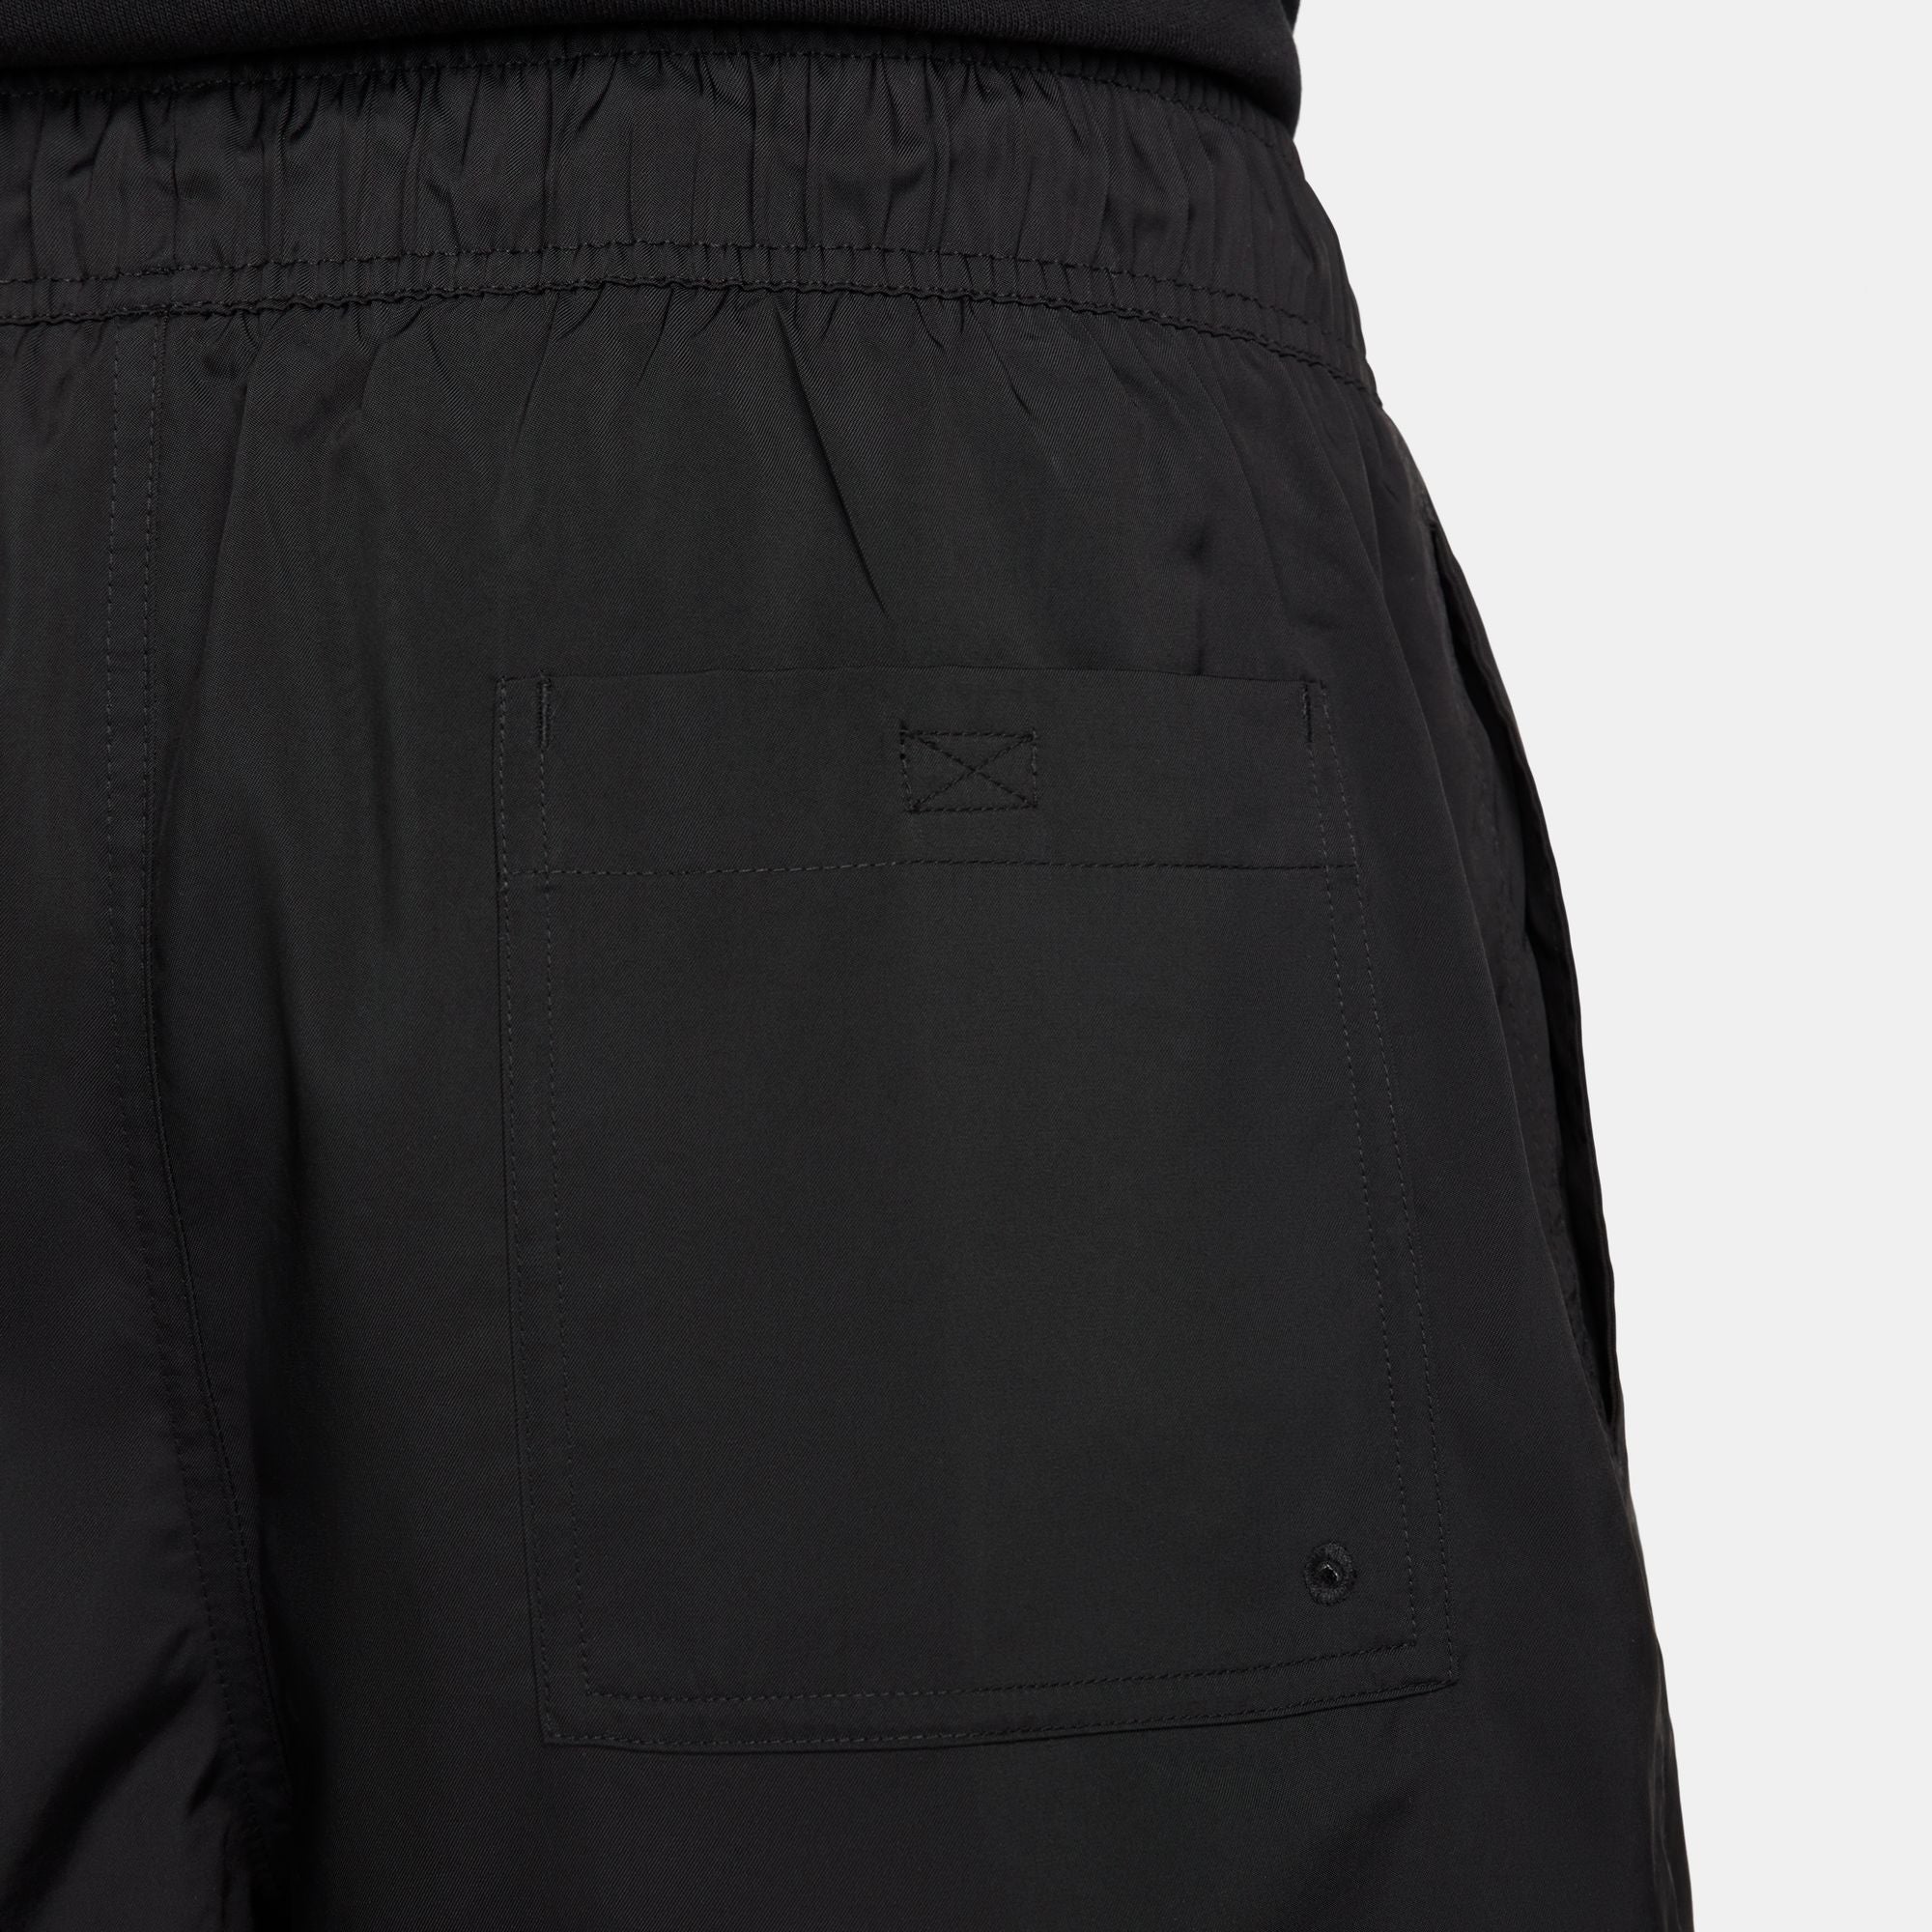 Nike Club Woven Shorts 'Black'